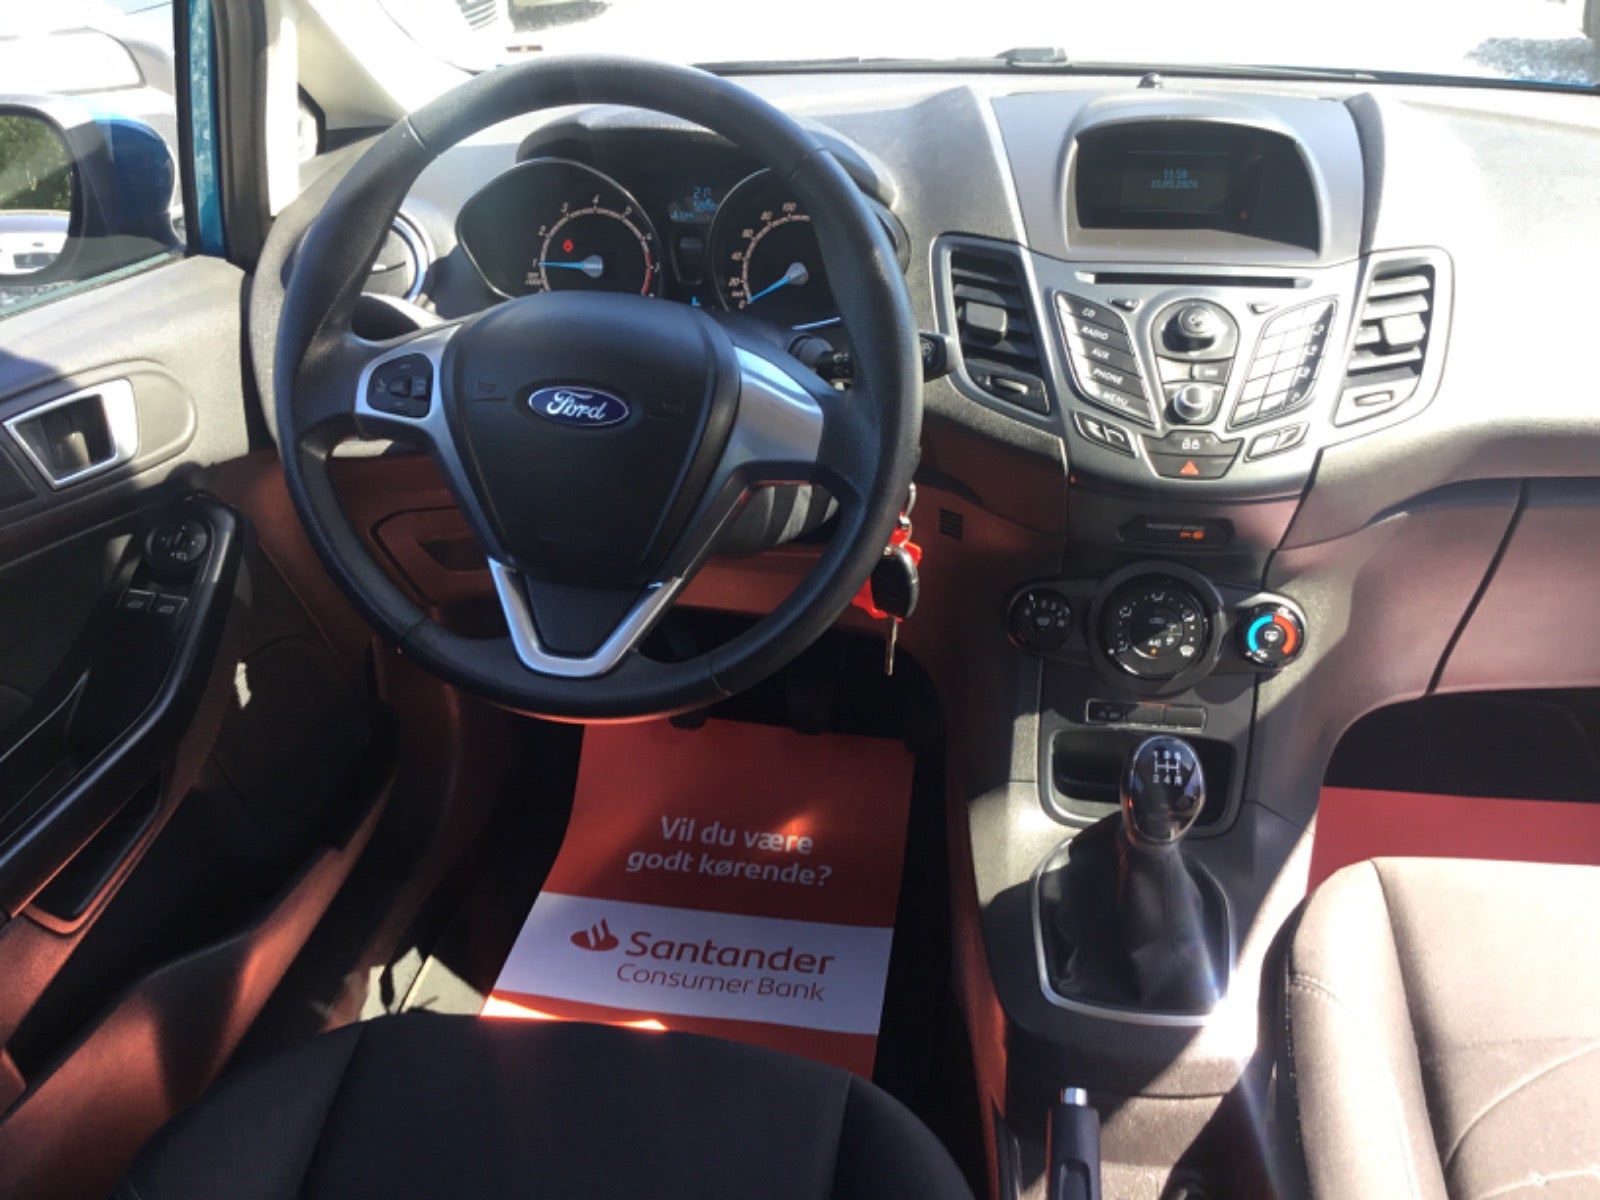 Ford Fiesta 1,0 80 Titanium Benzin modelår 2015 km 86000